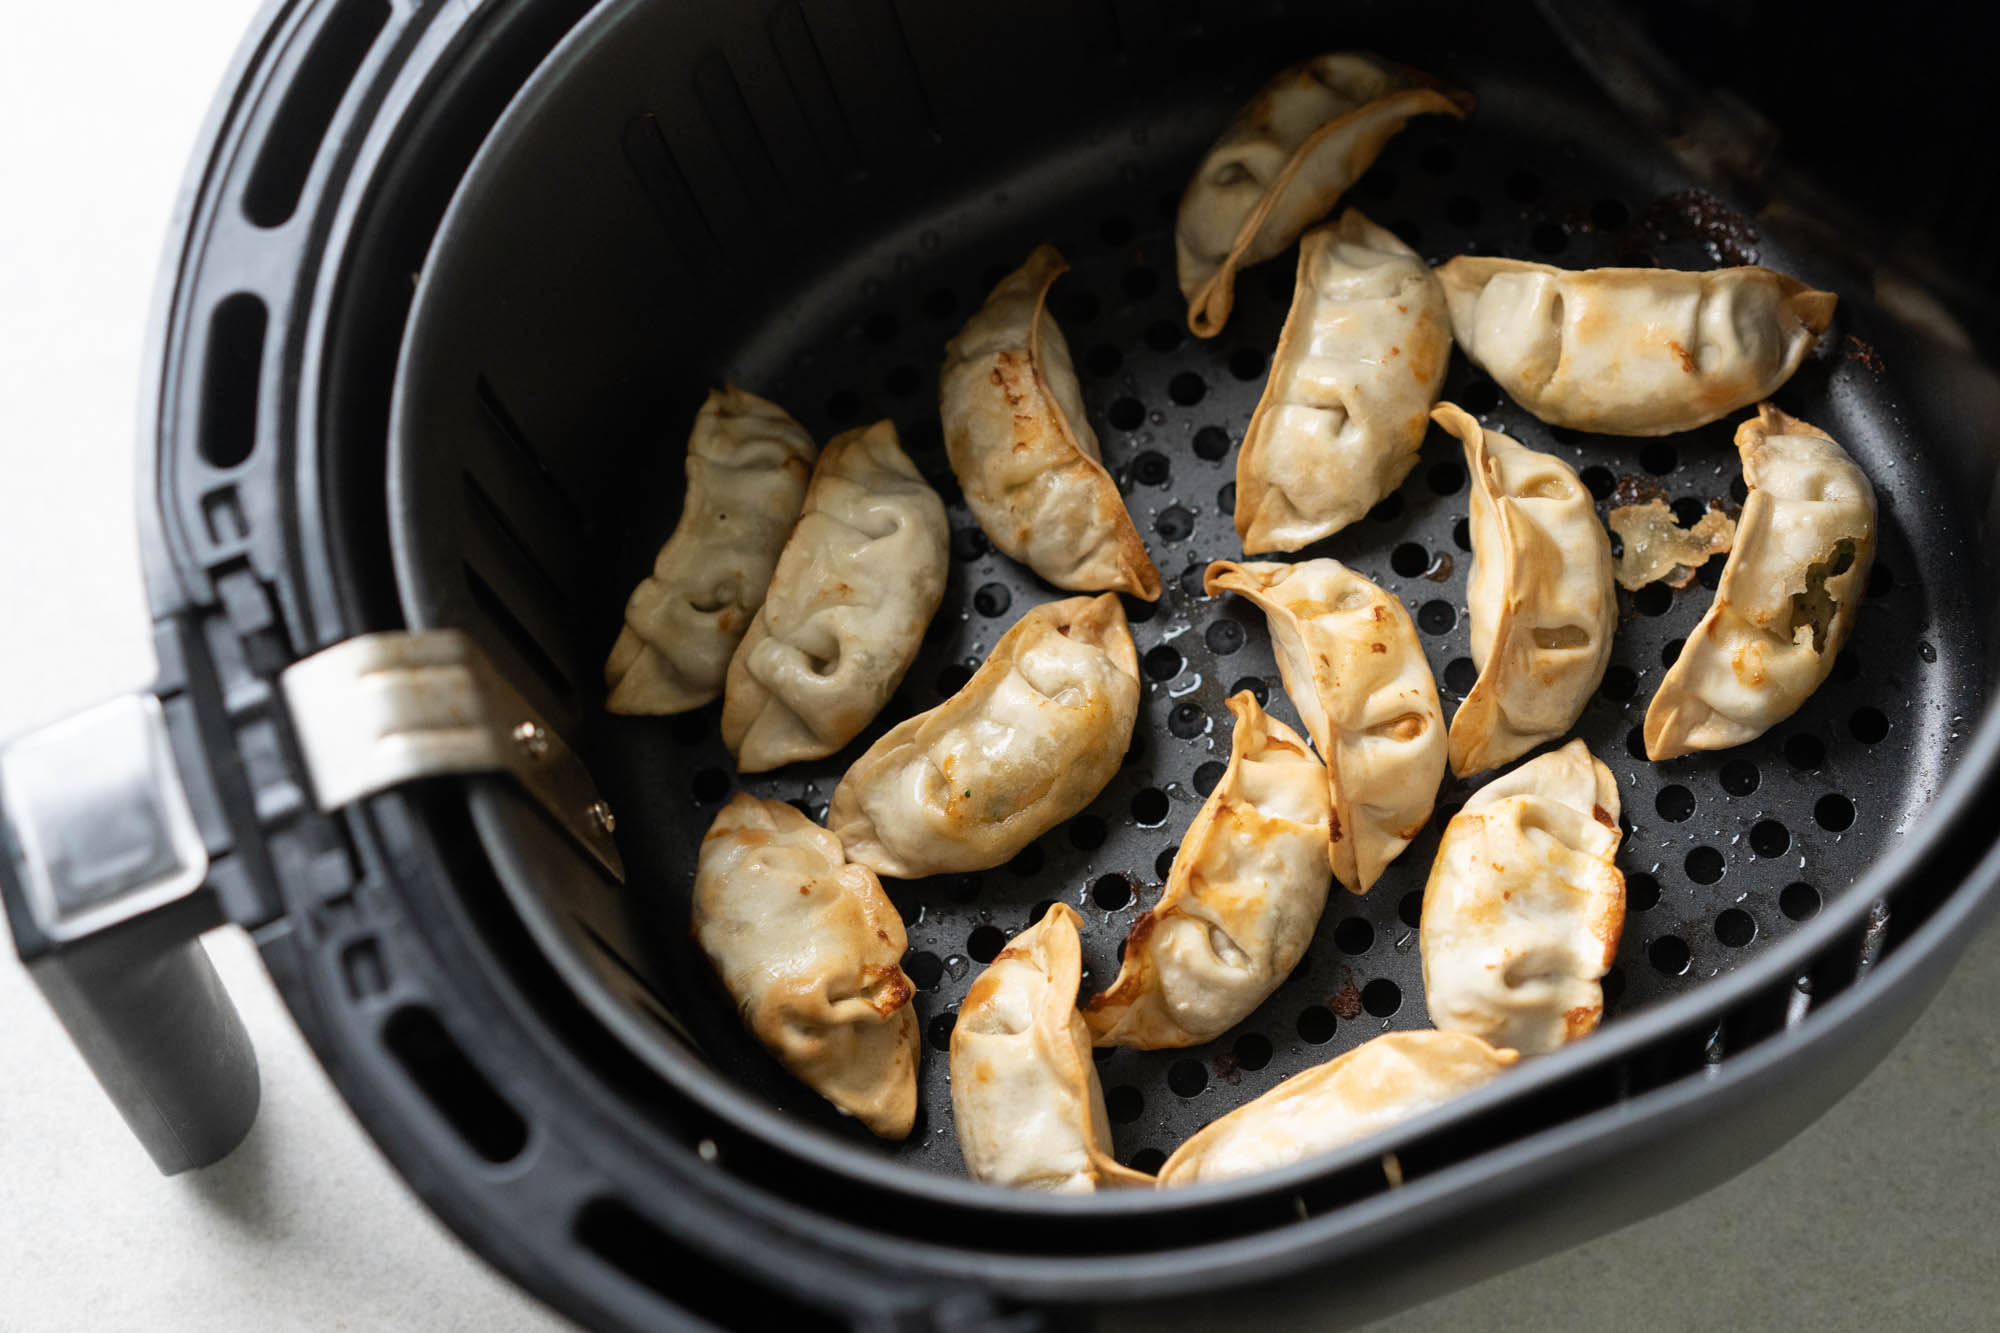 https://www.hungryhuy.com/wp-content/uploads/cooked-air-fryer-dumplings-1.jpg